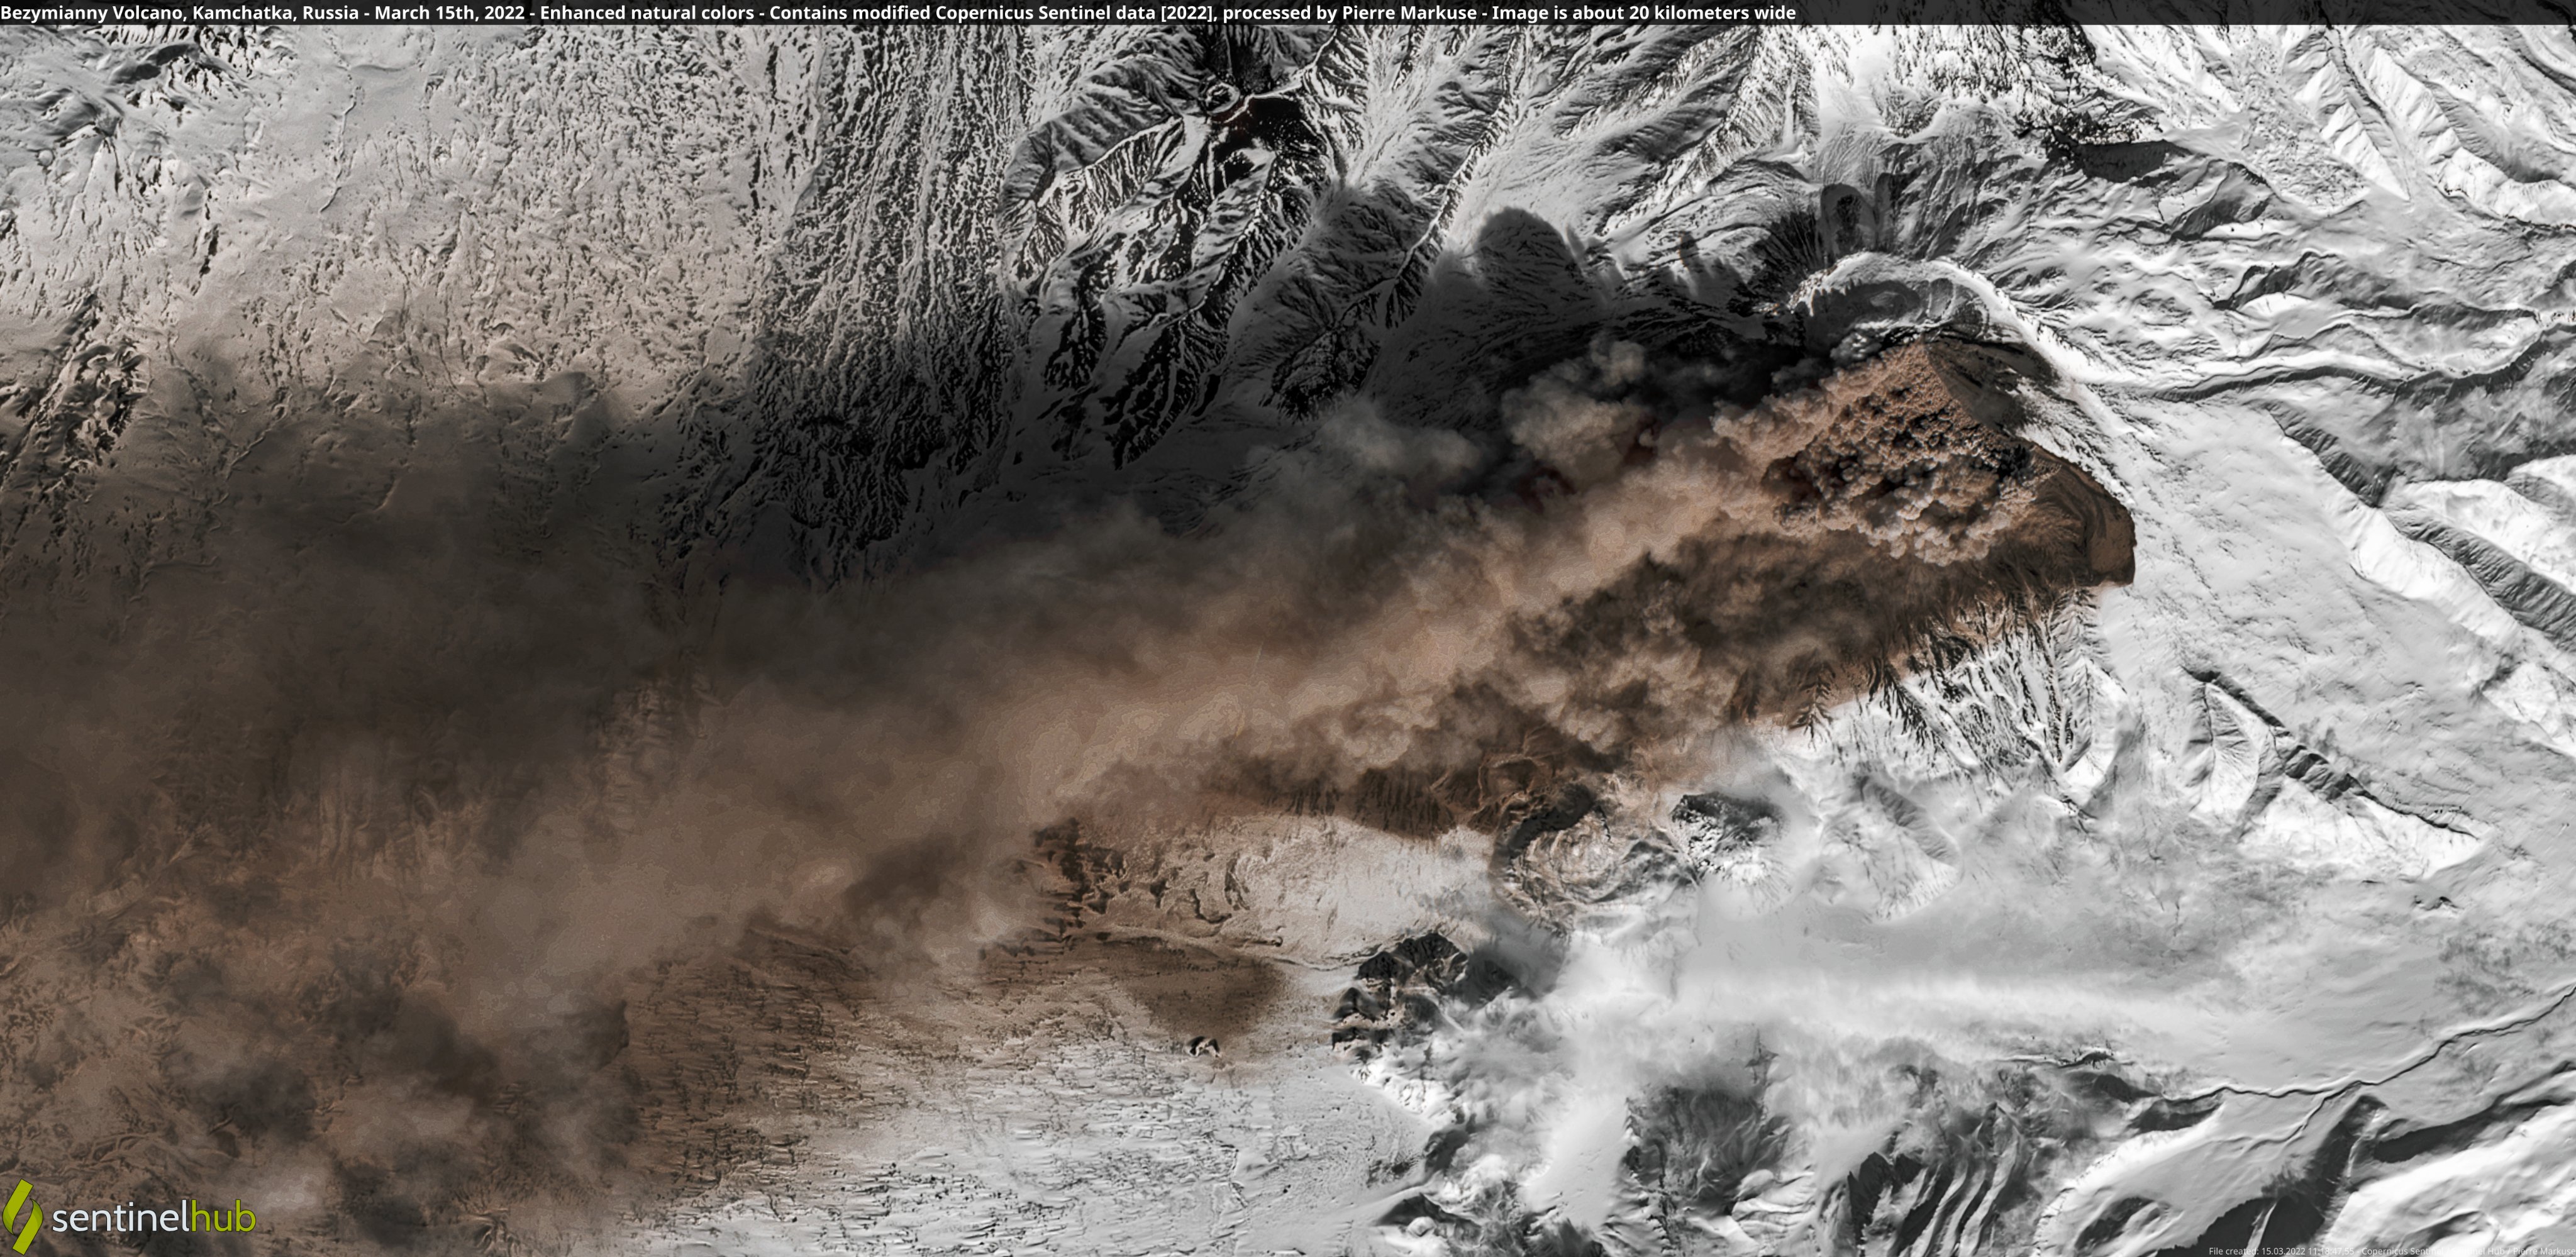 Satellite image of the Bezymianny Volcano, Kamchatka, Russia. 15 March 2022. Copernicus/Pierre Markuse